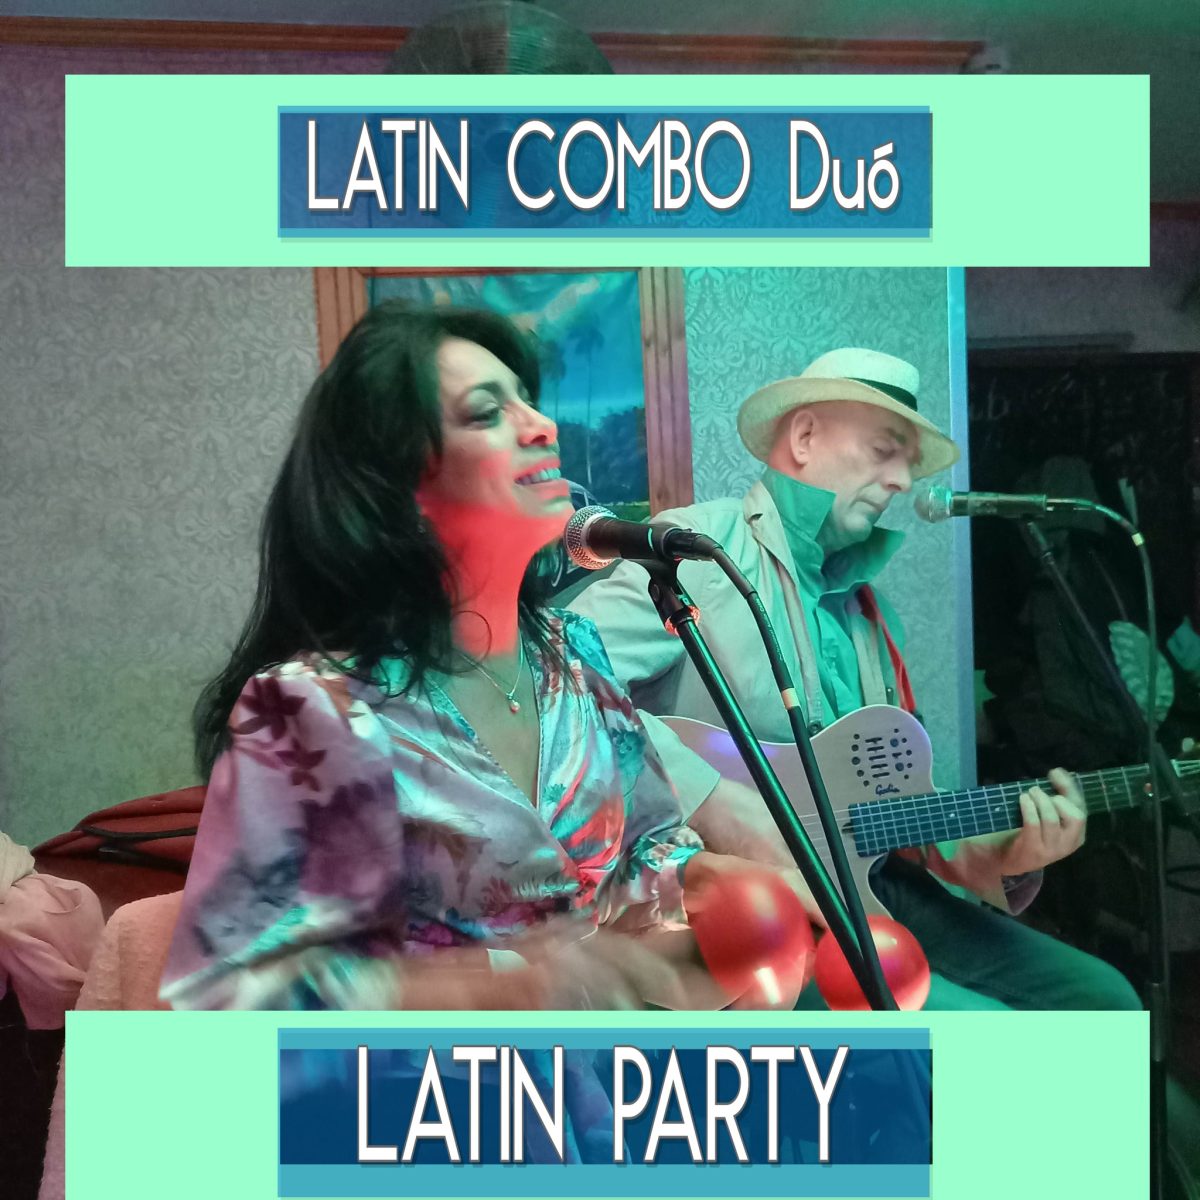 Latin Combo Duo